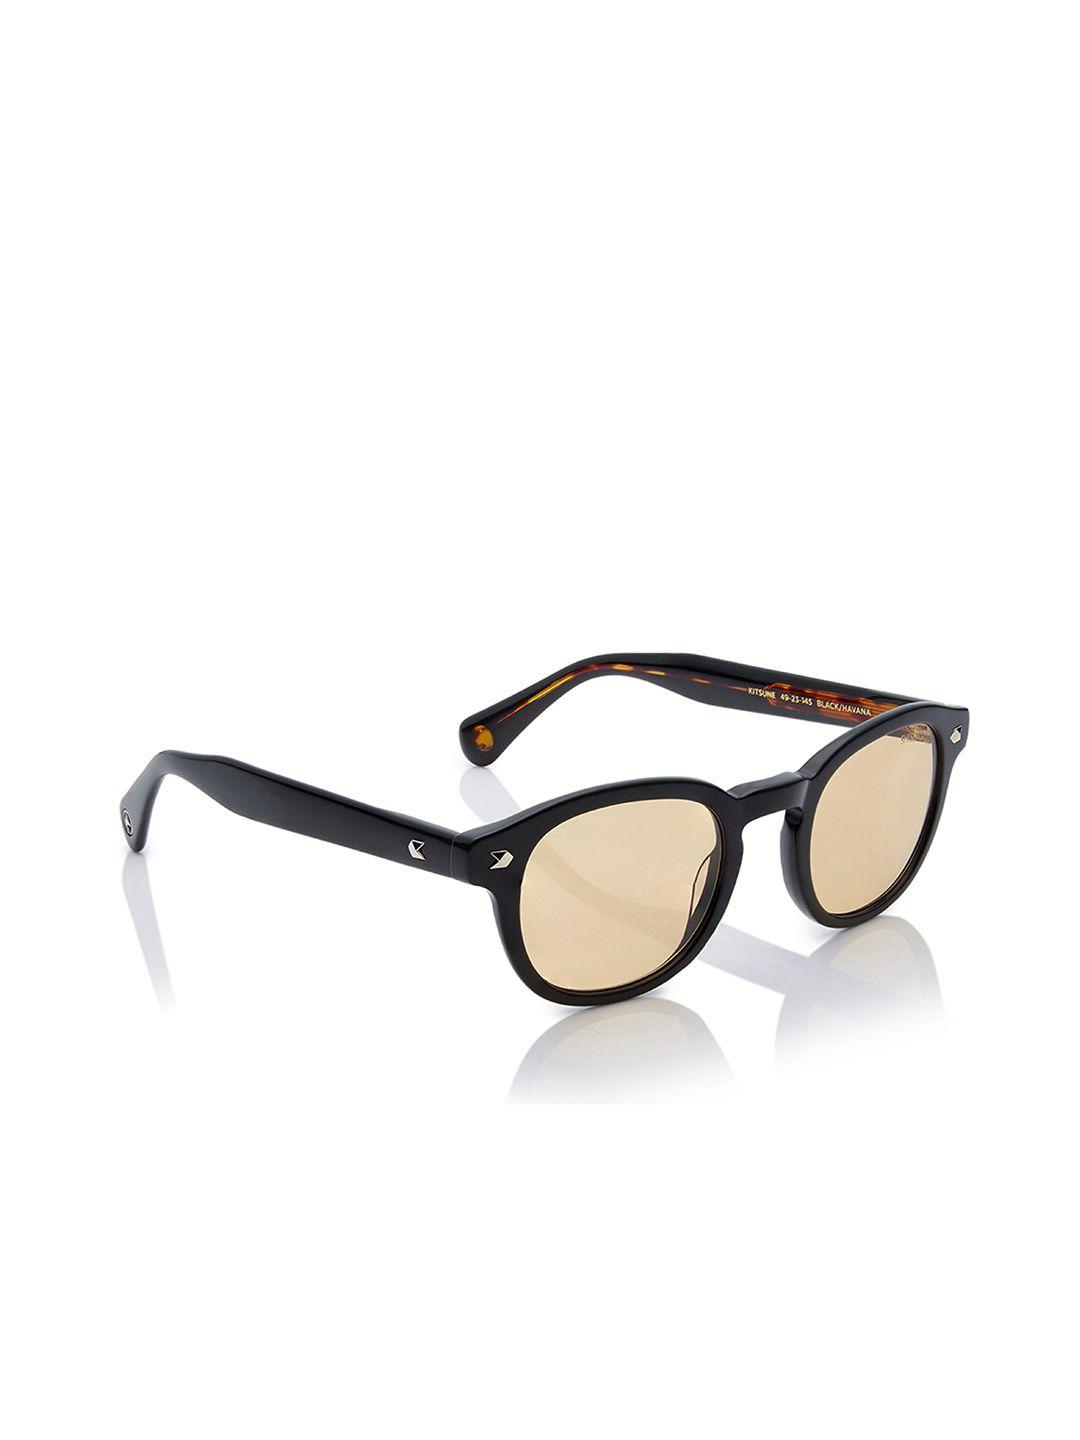 shisen fox kitsune unisex round sunglasses with uv protected lens sg027